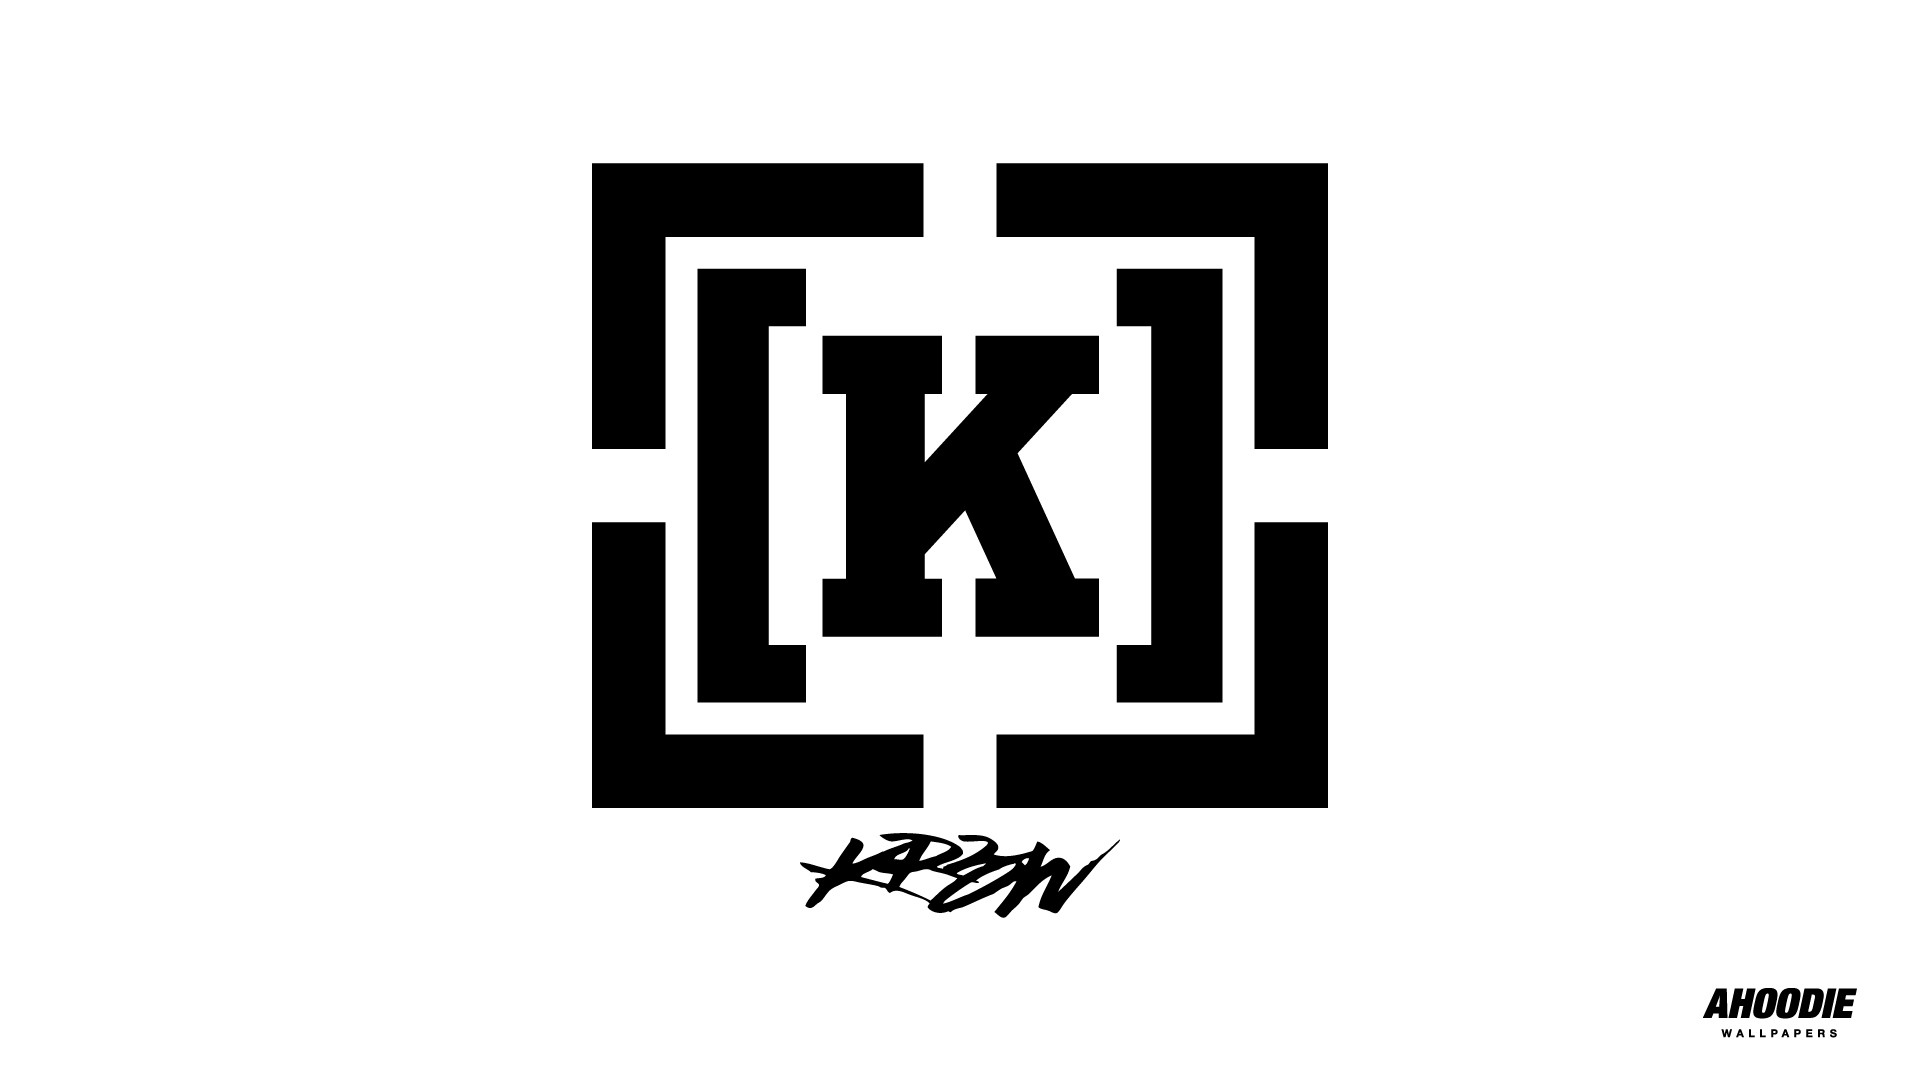 1920x1080 Image of the KR3W Company Logo (http://www.ahoodie.com